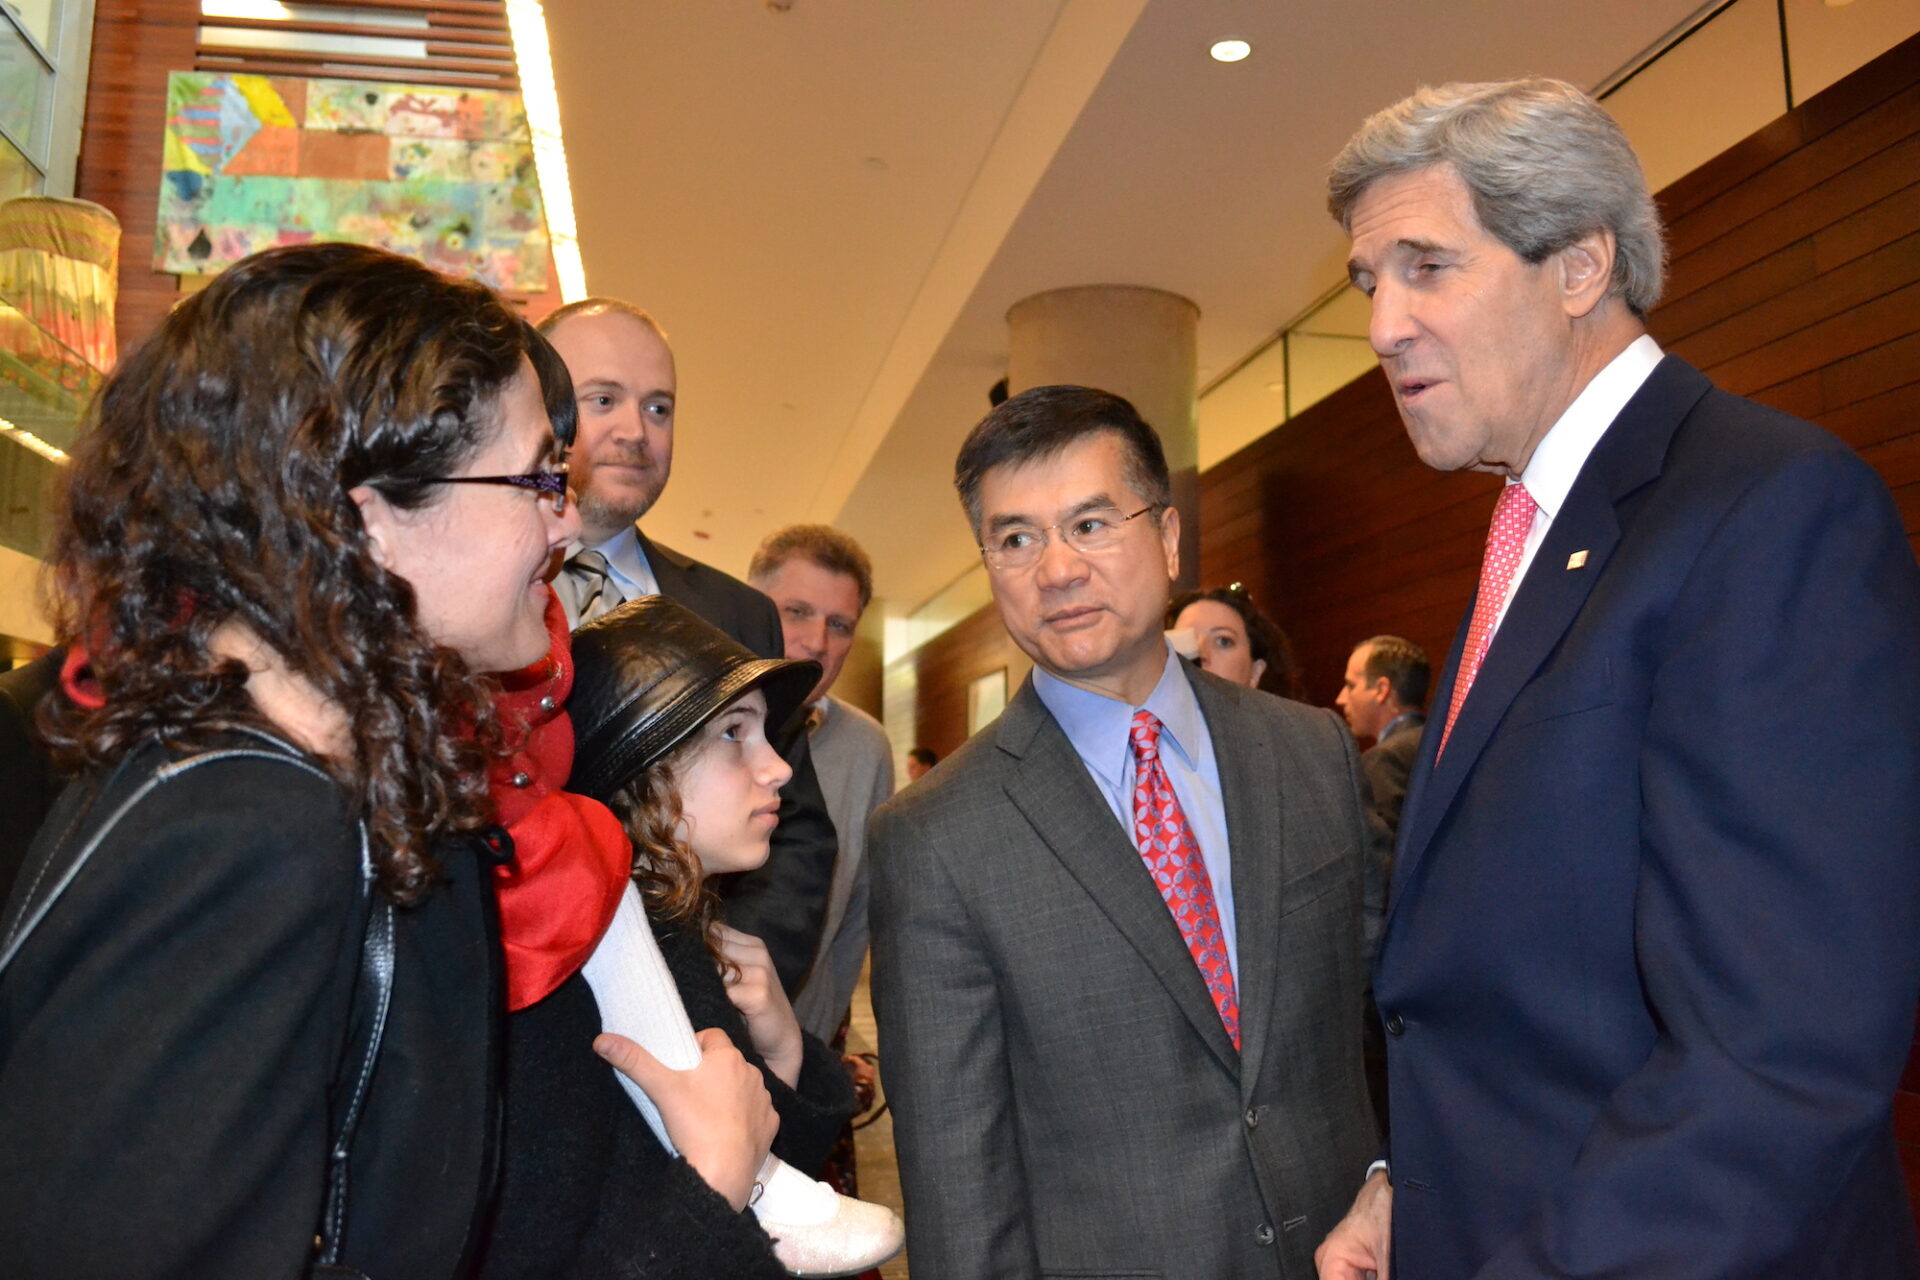 Erica Keen Thomas (left) speaks with U.S. Ambassador Gary Locke (center) and U.S. Secretary of State John Kerry (right).